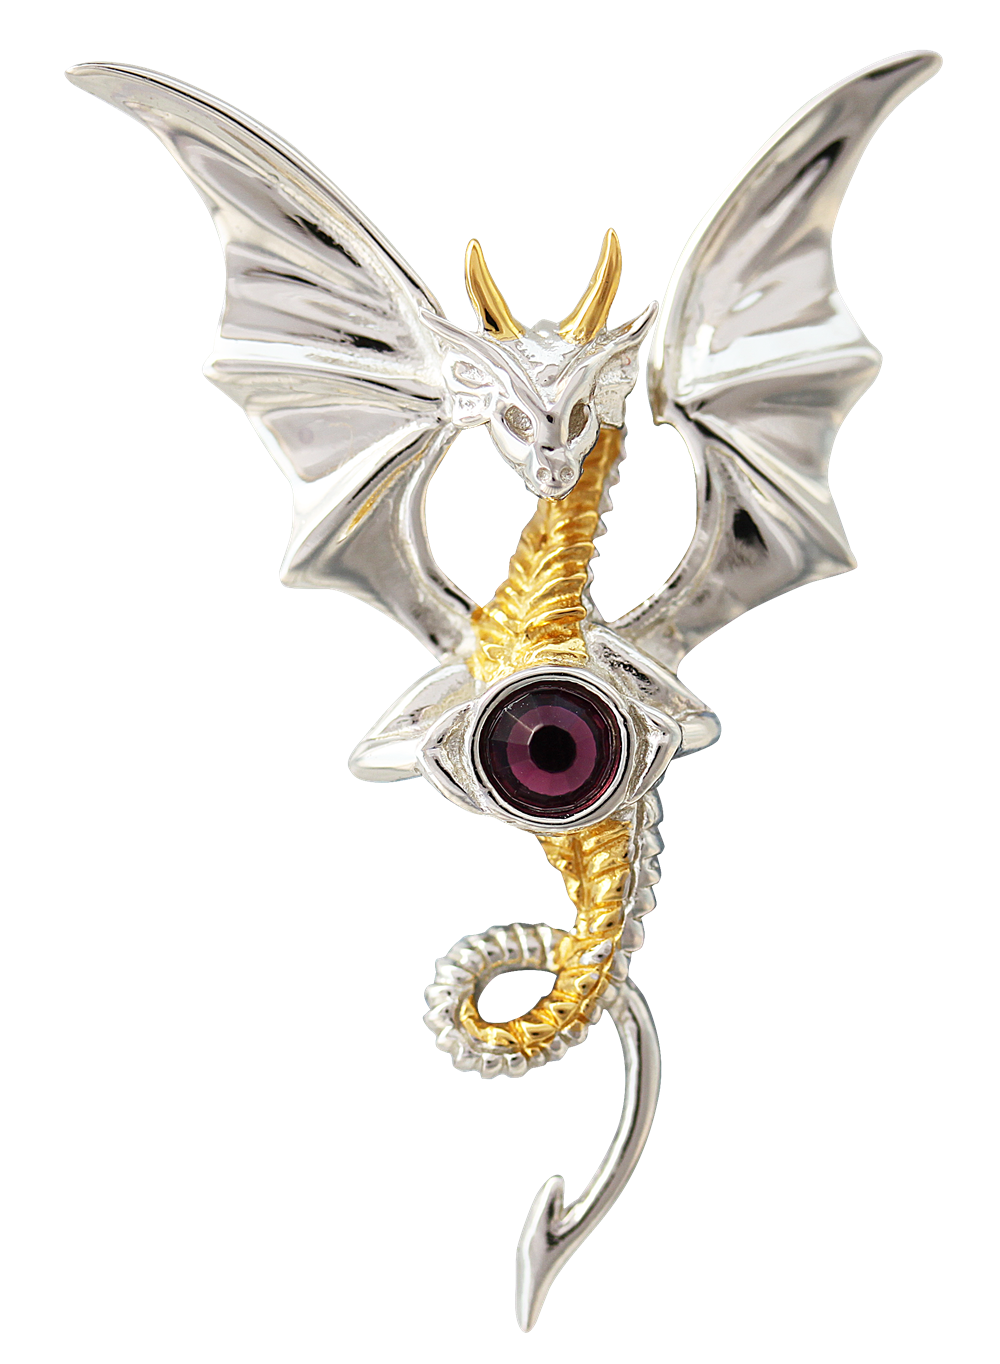 Celestial Dragon for Inner Peace by Anne Stokes